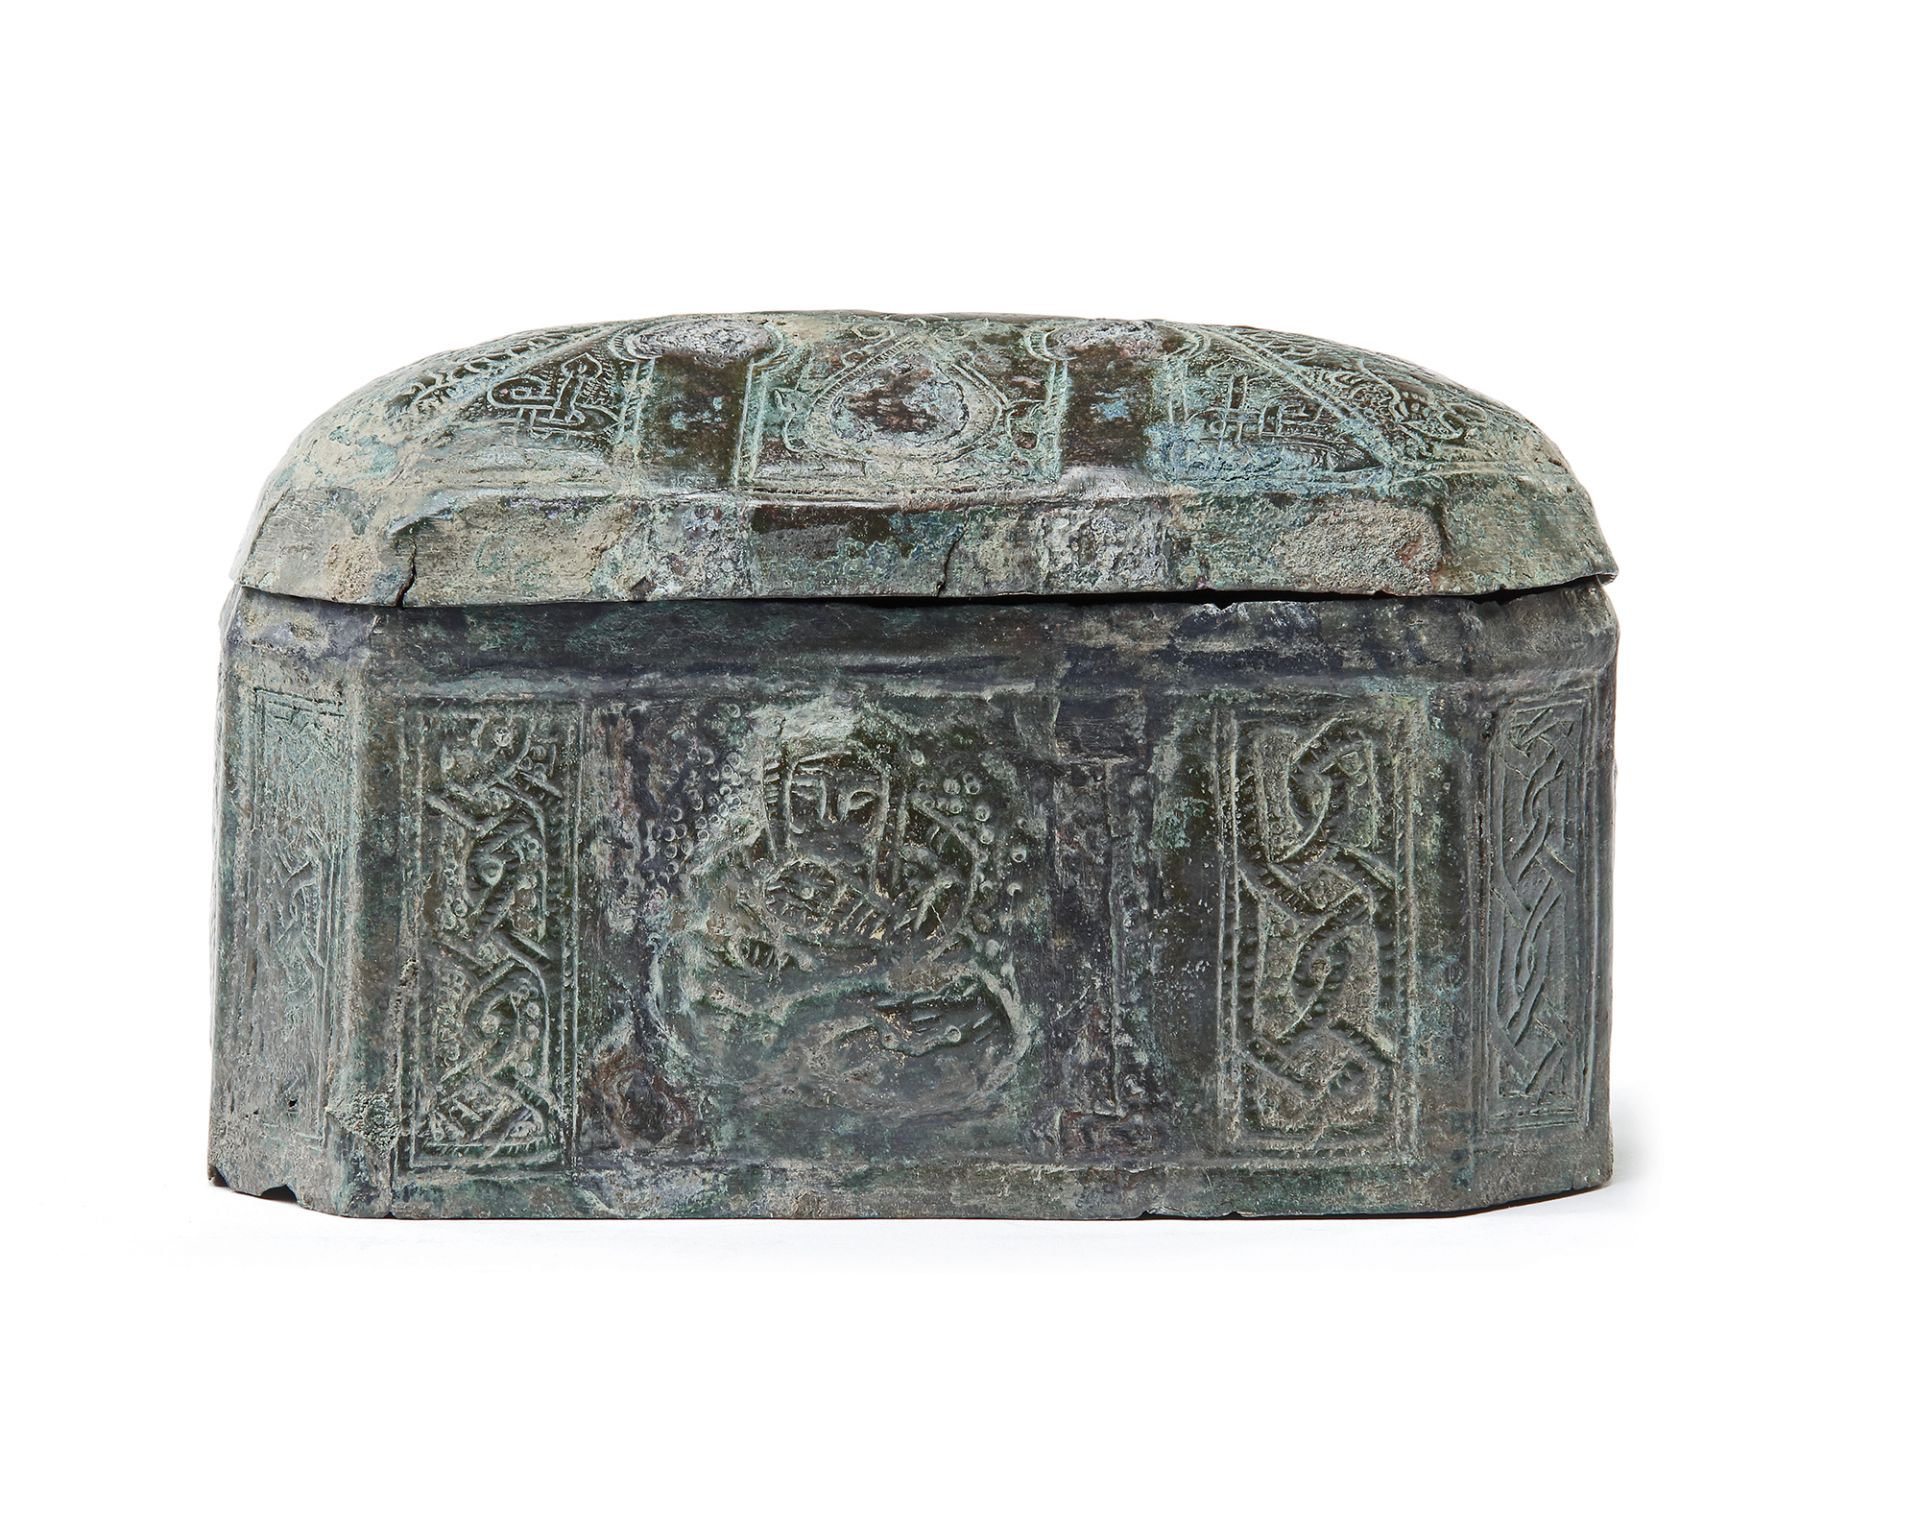 A SELJUK BRONZE BOX, 13TH CENTURY